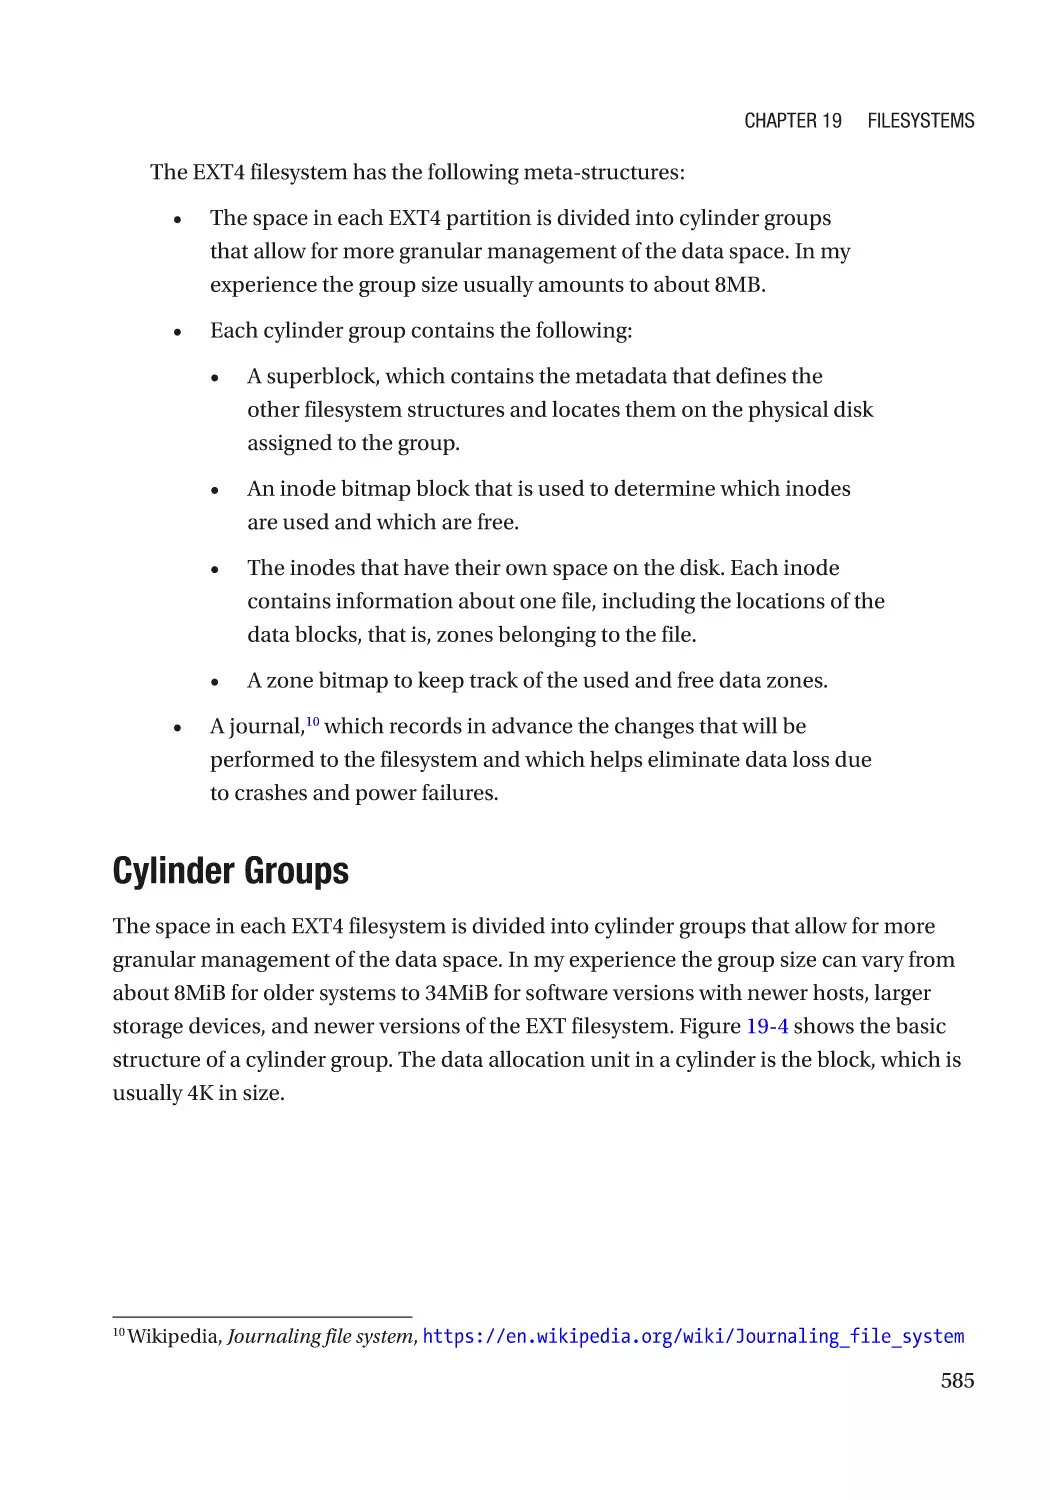 Cylinder Groups